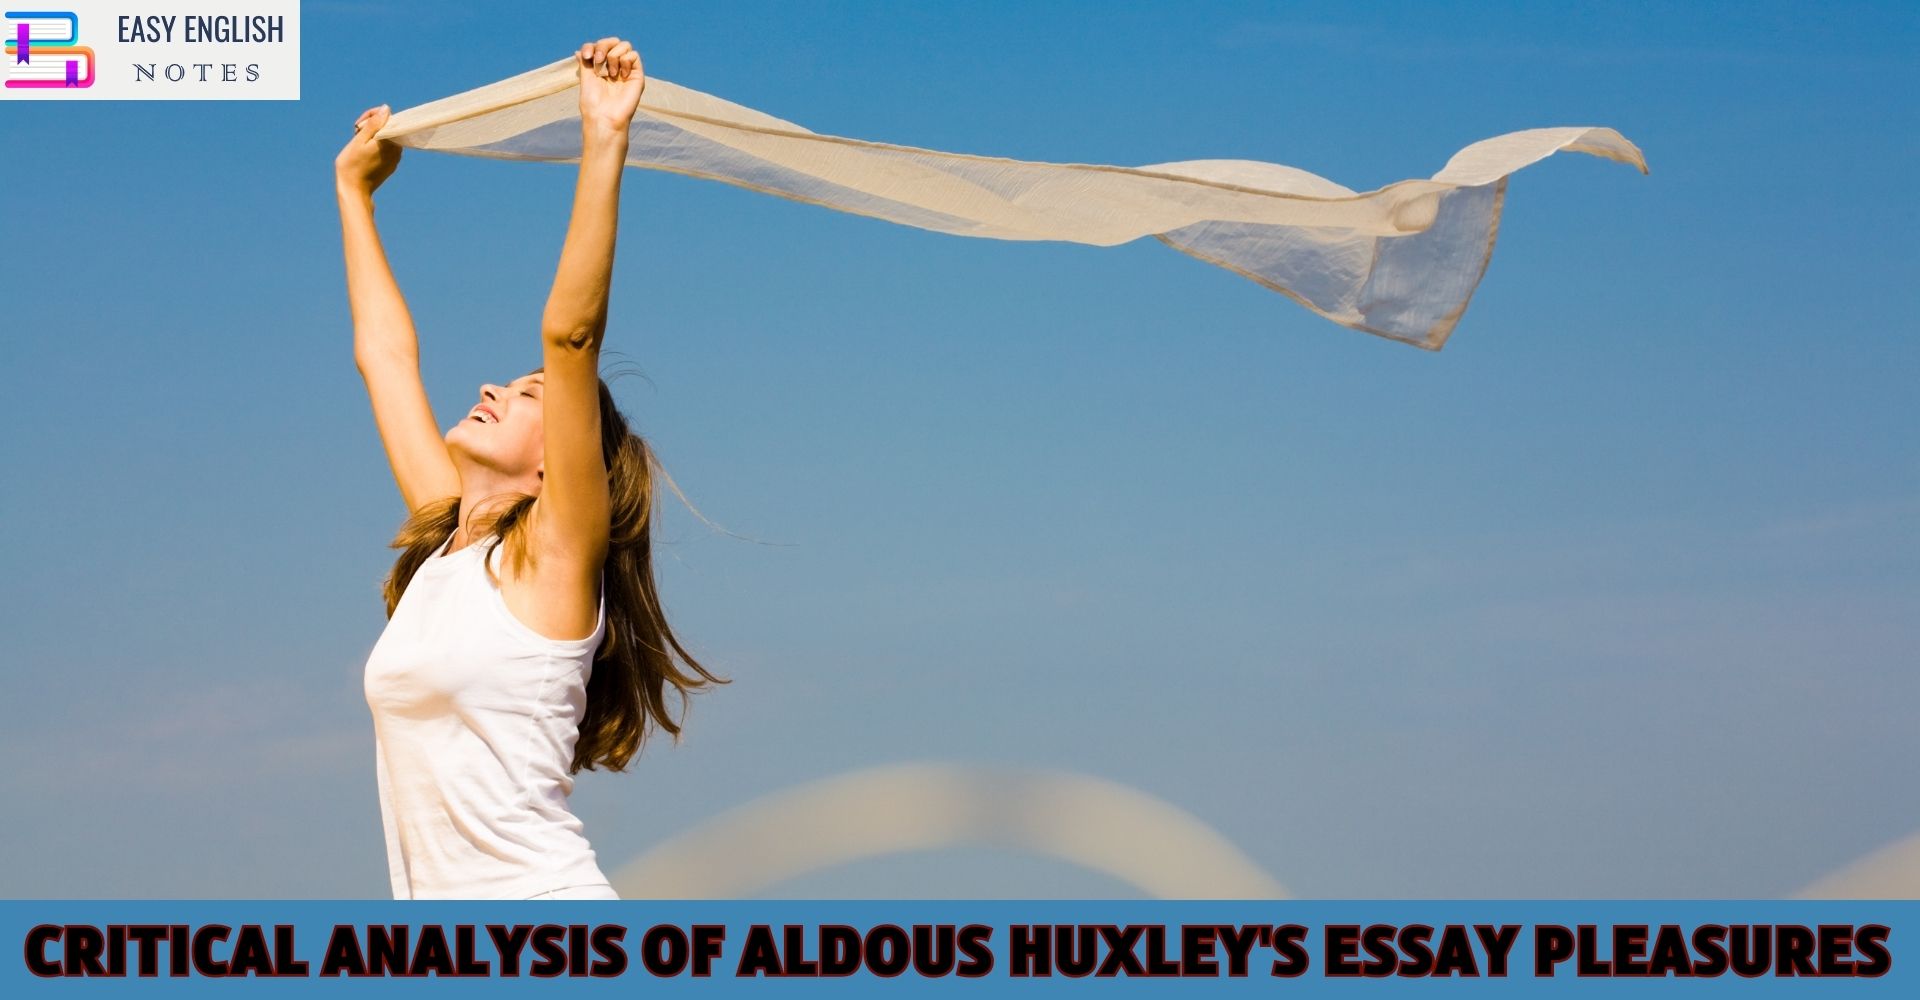 Critical Analysis of Aldous Huxley's Essay Pleasures